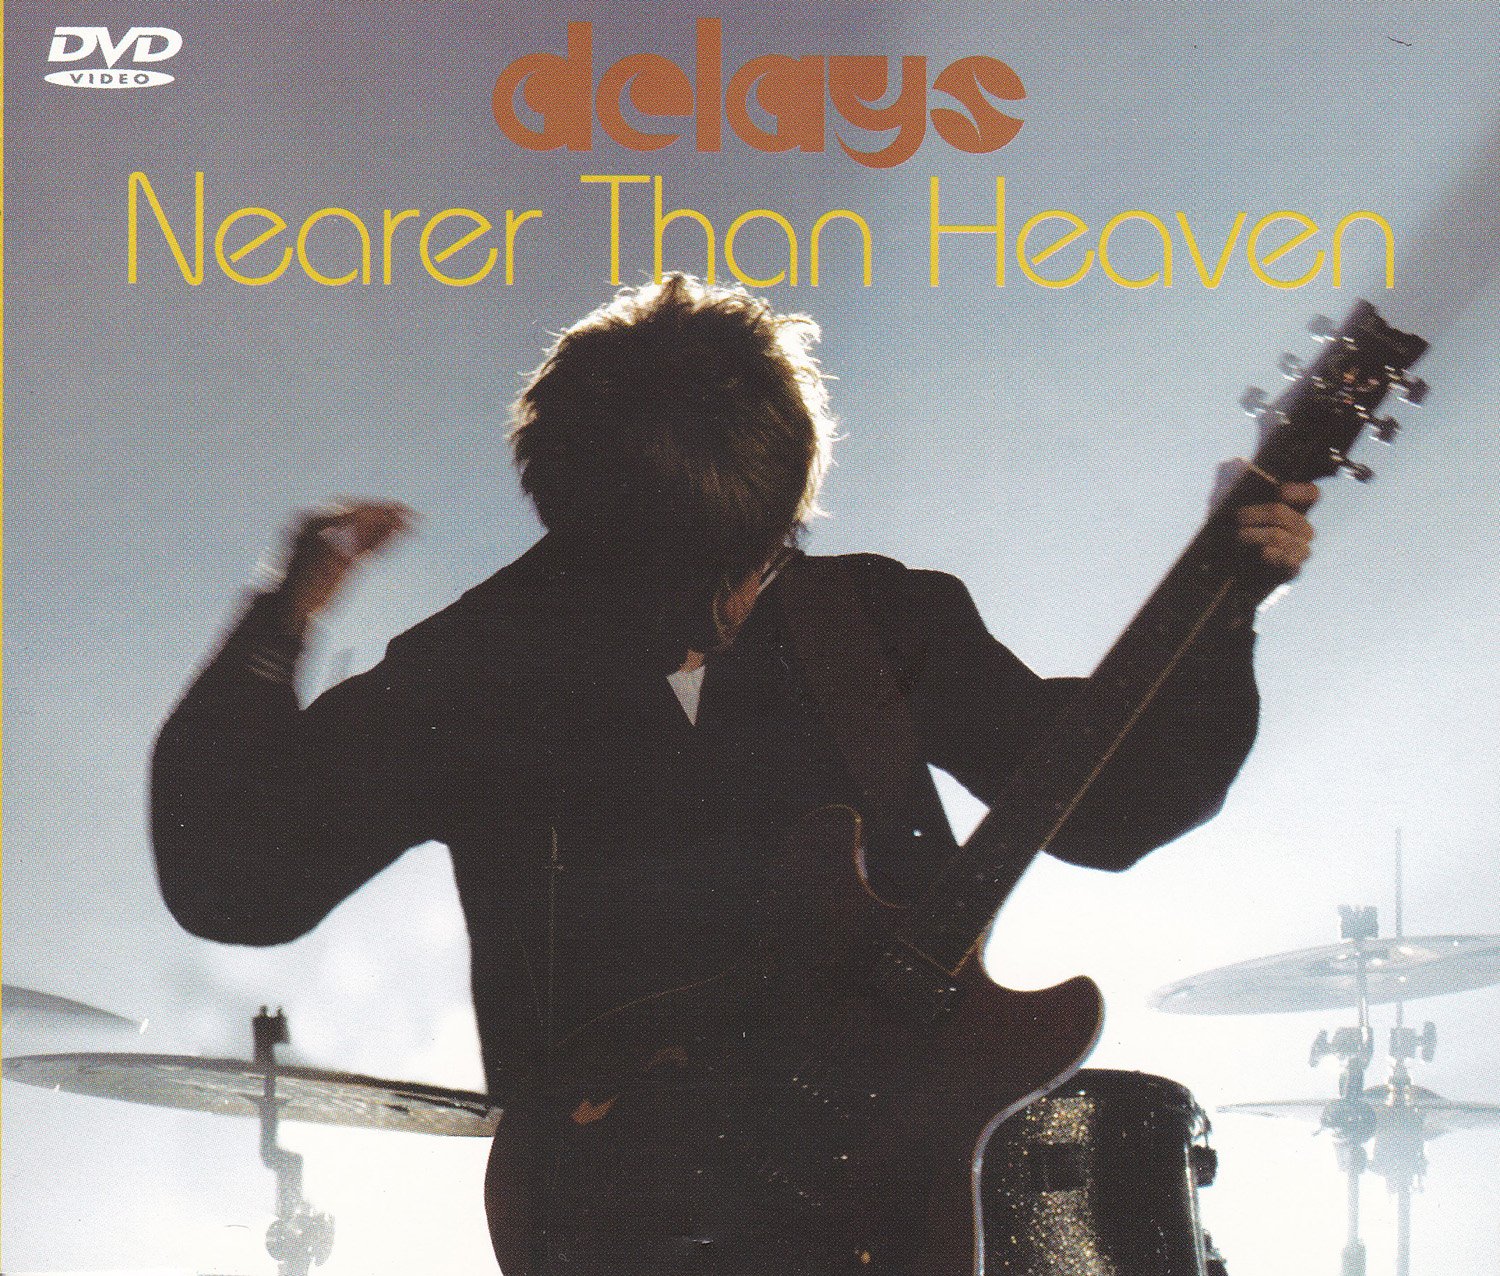 Delays / Nearer Than Heaven (7" Single Cover)